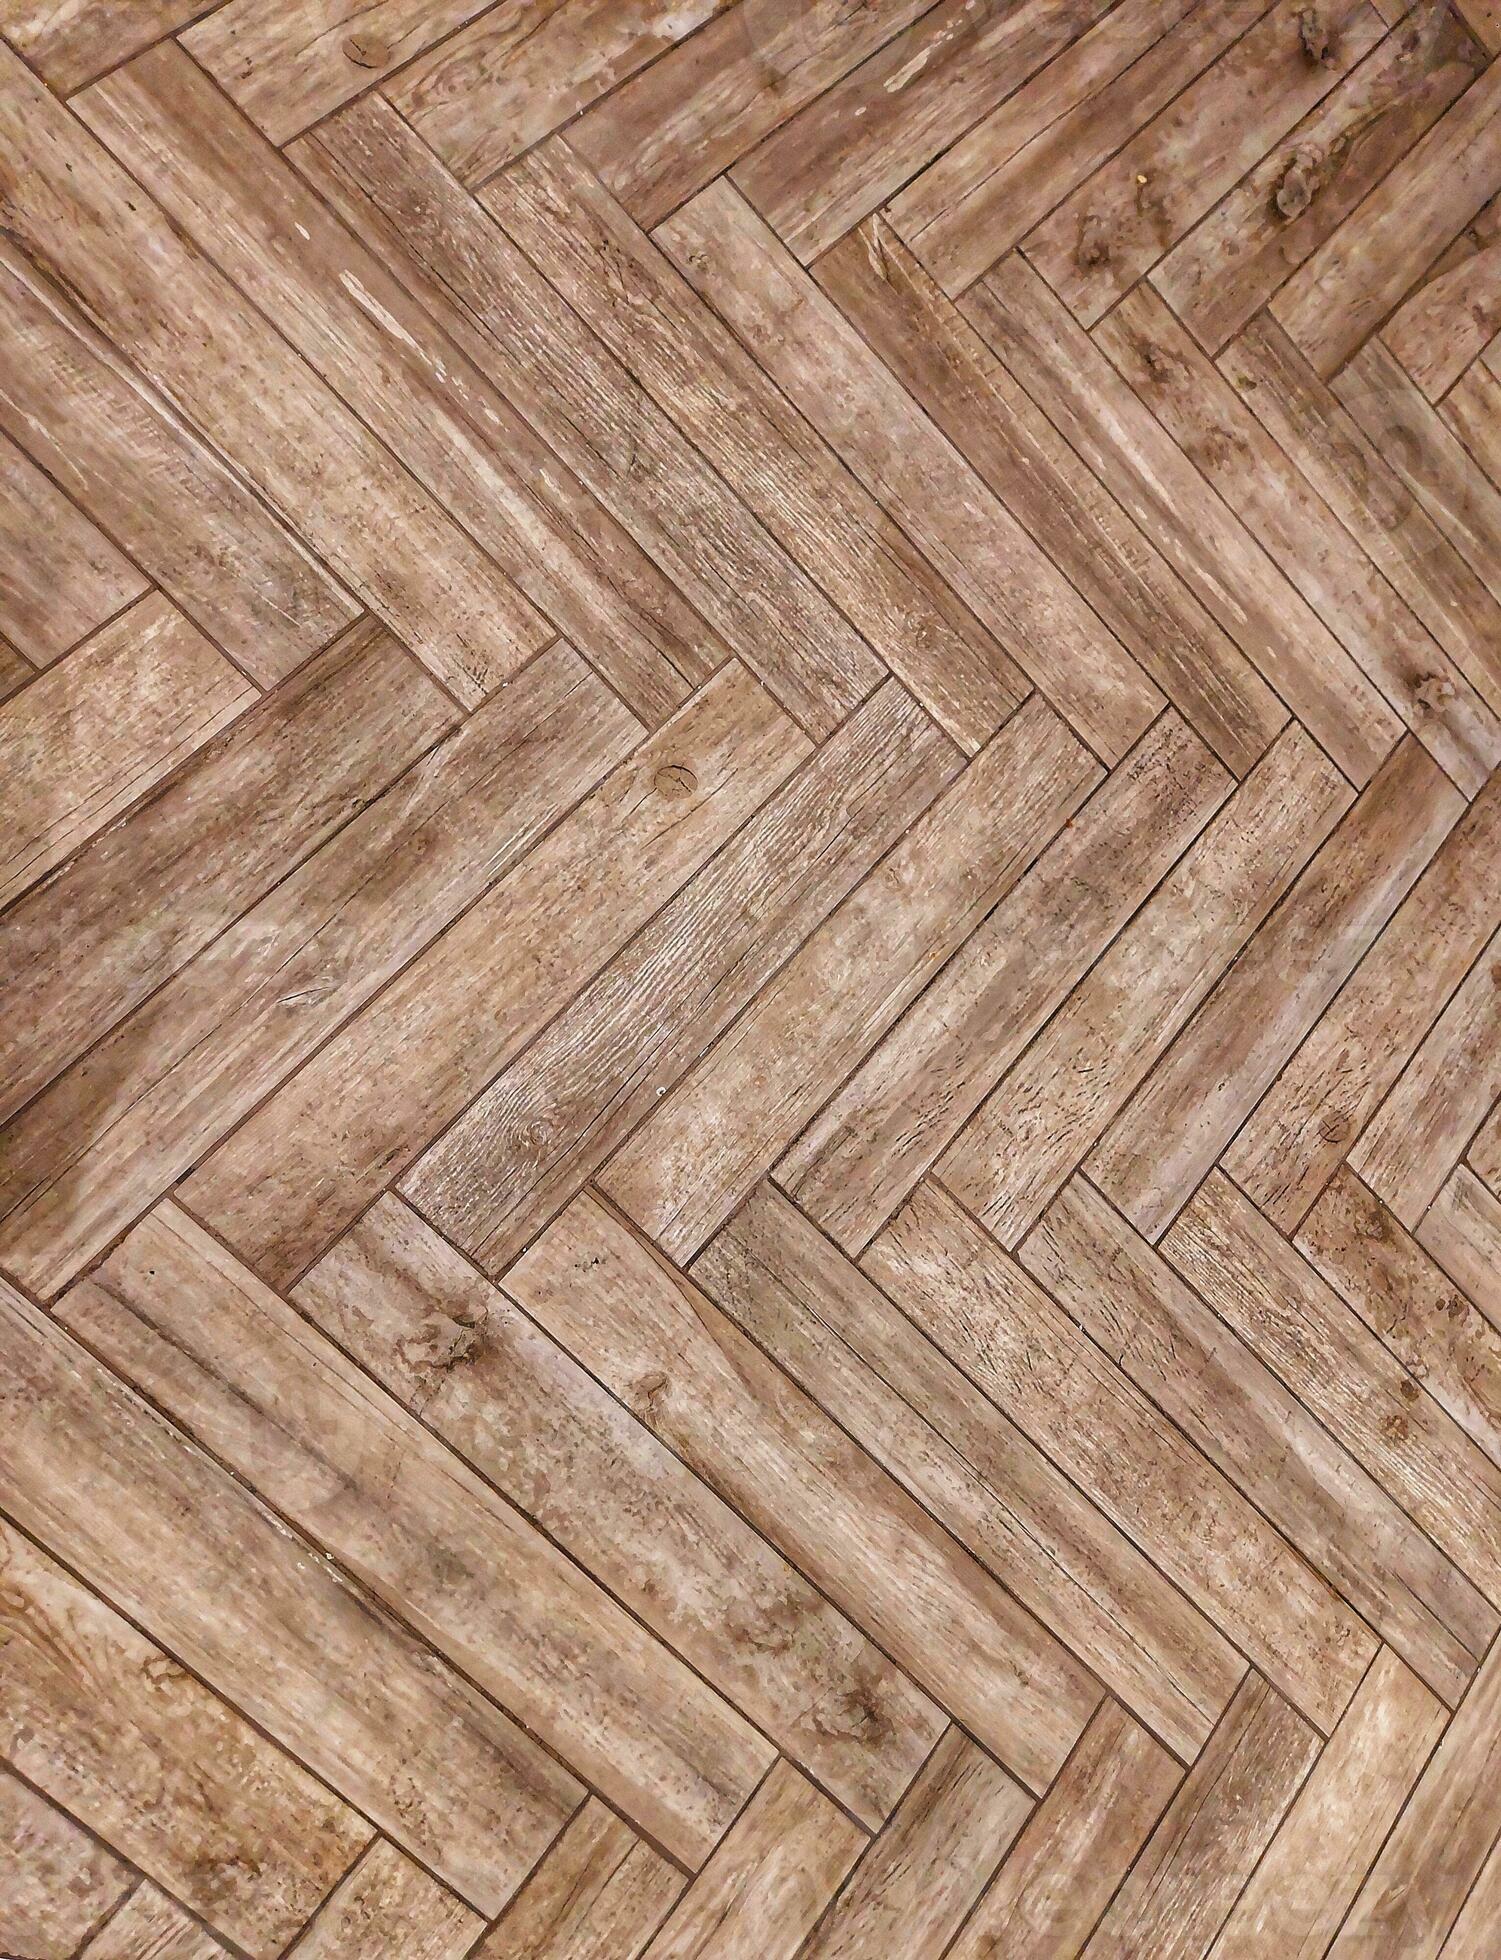 Tiled Floor Paving Tile Texture